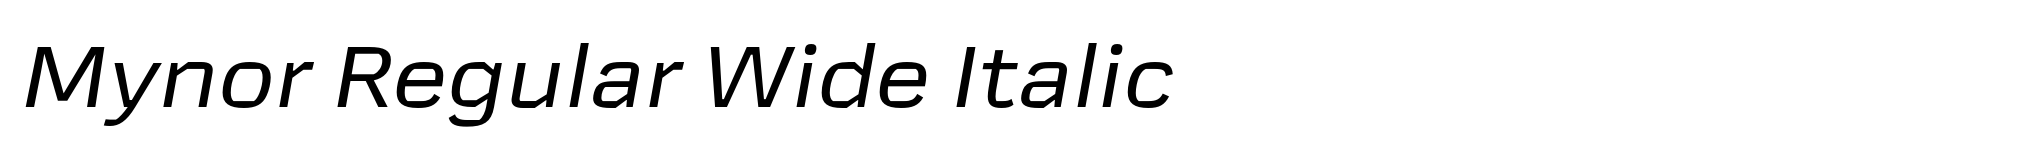 Mynor Regular Wide Italic image